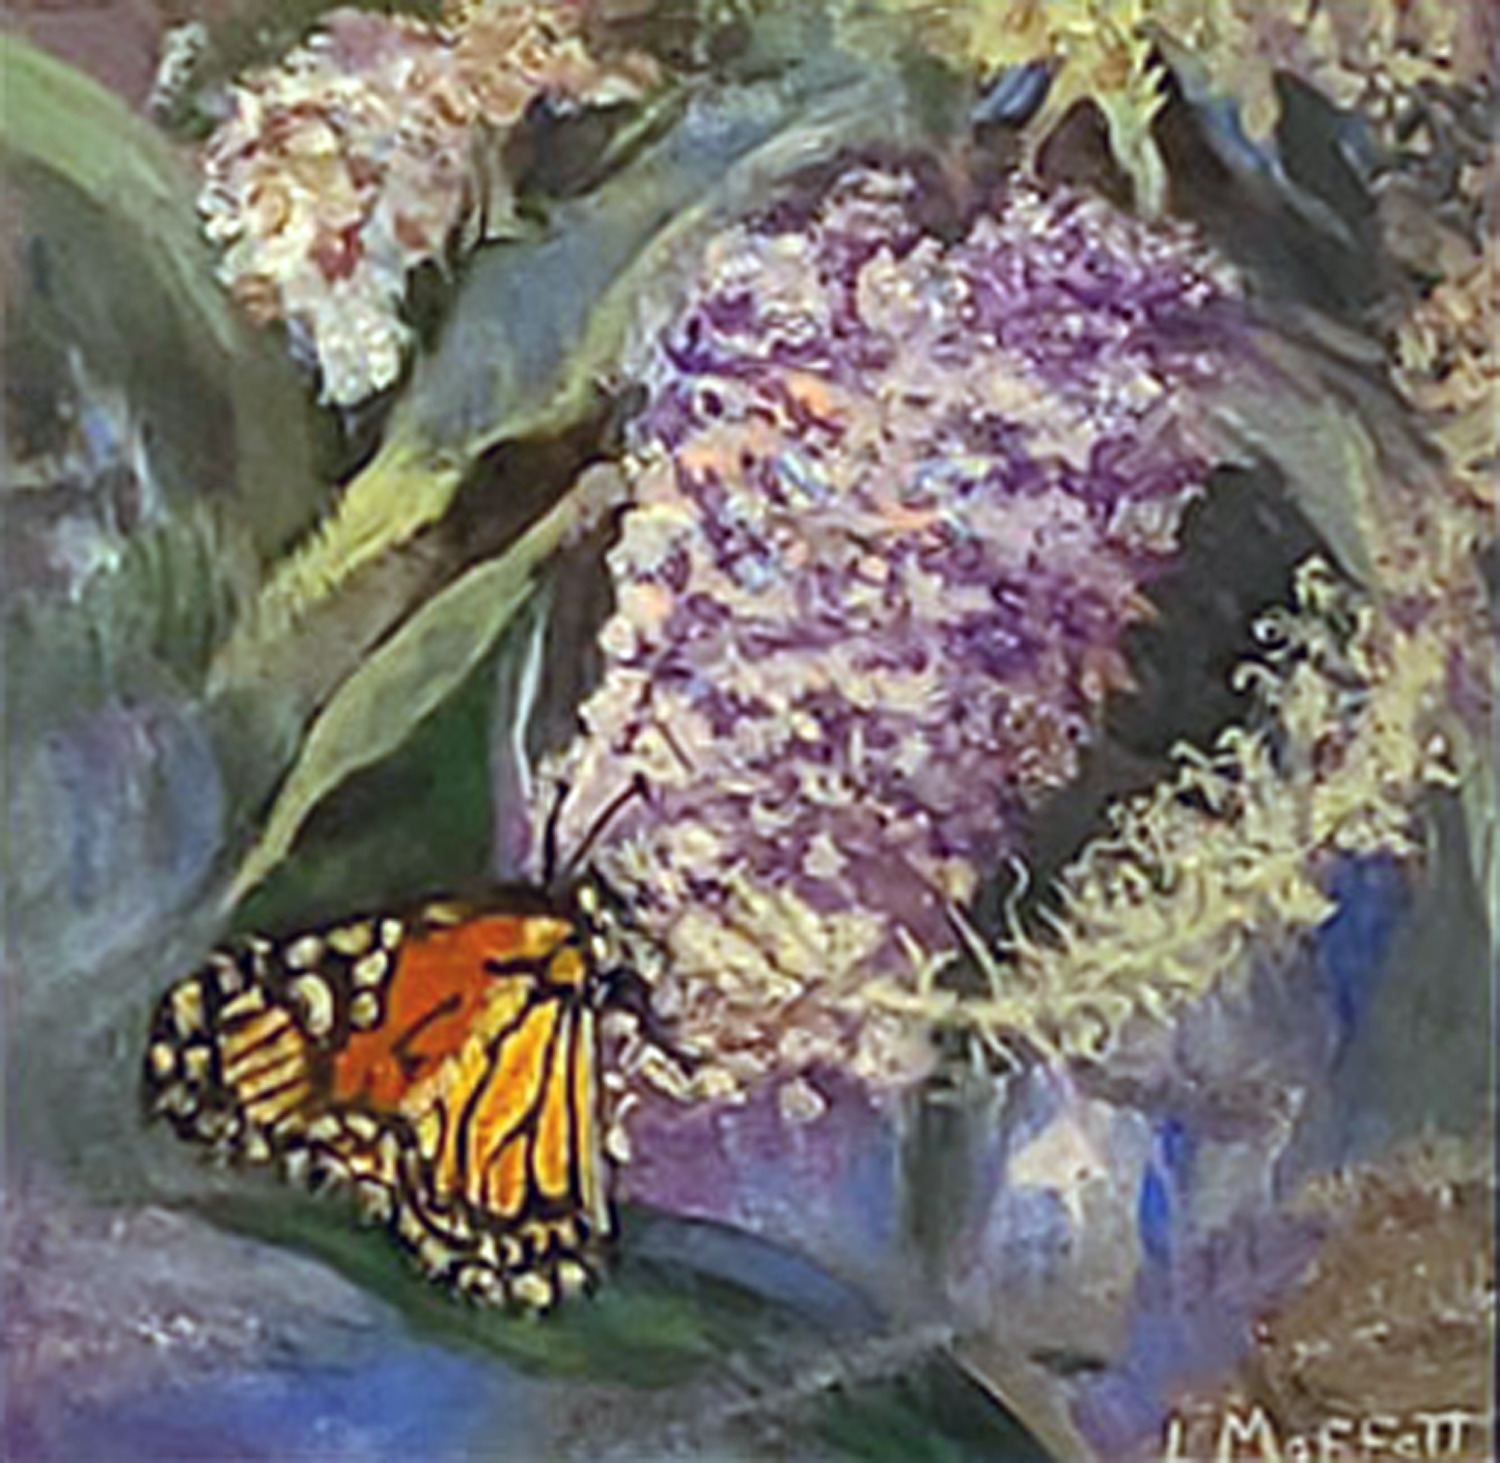 Monarch butterfly by lynda moffatt q3pwnl